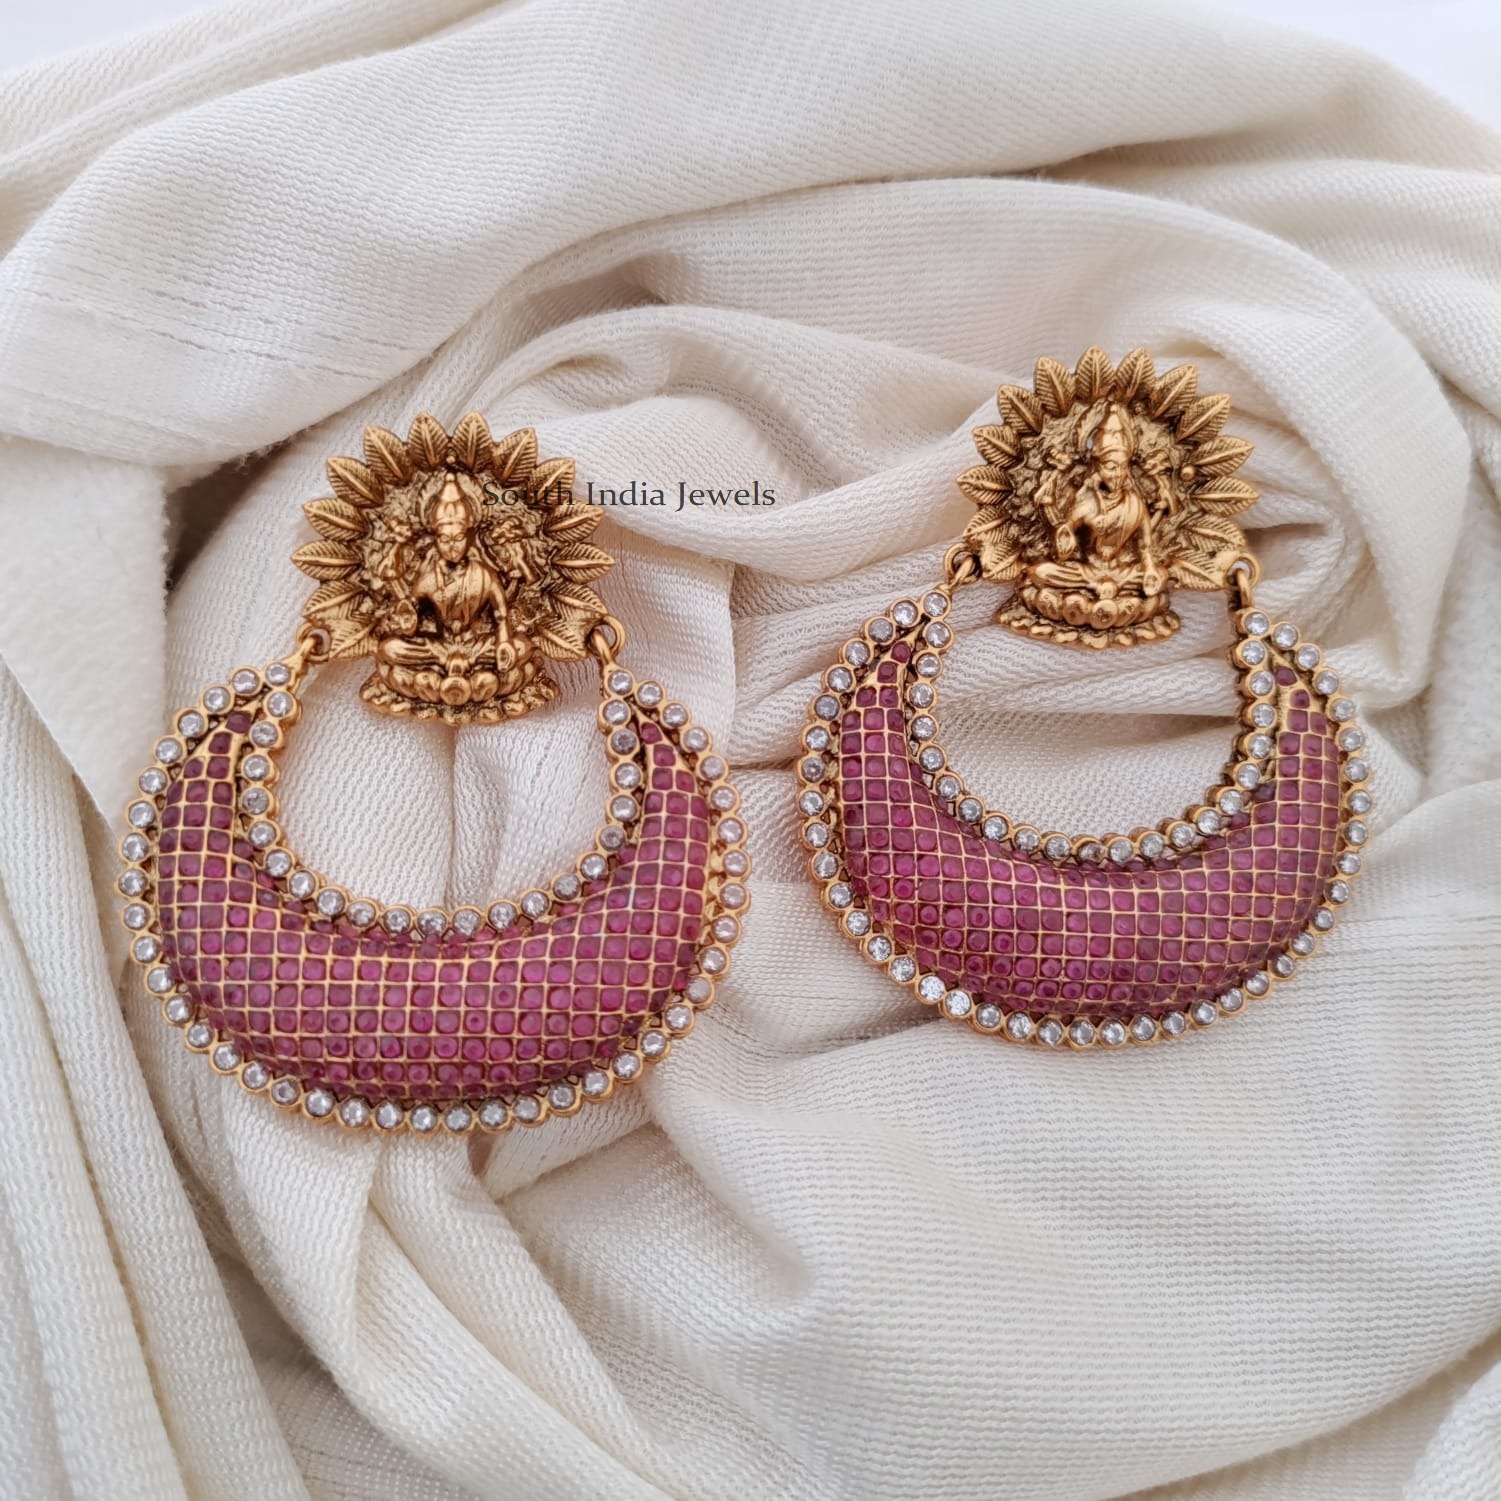 Stunning Ram Leela Ruby Earrings